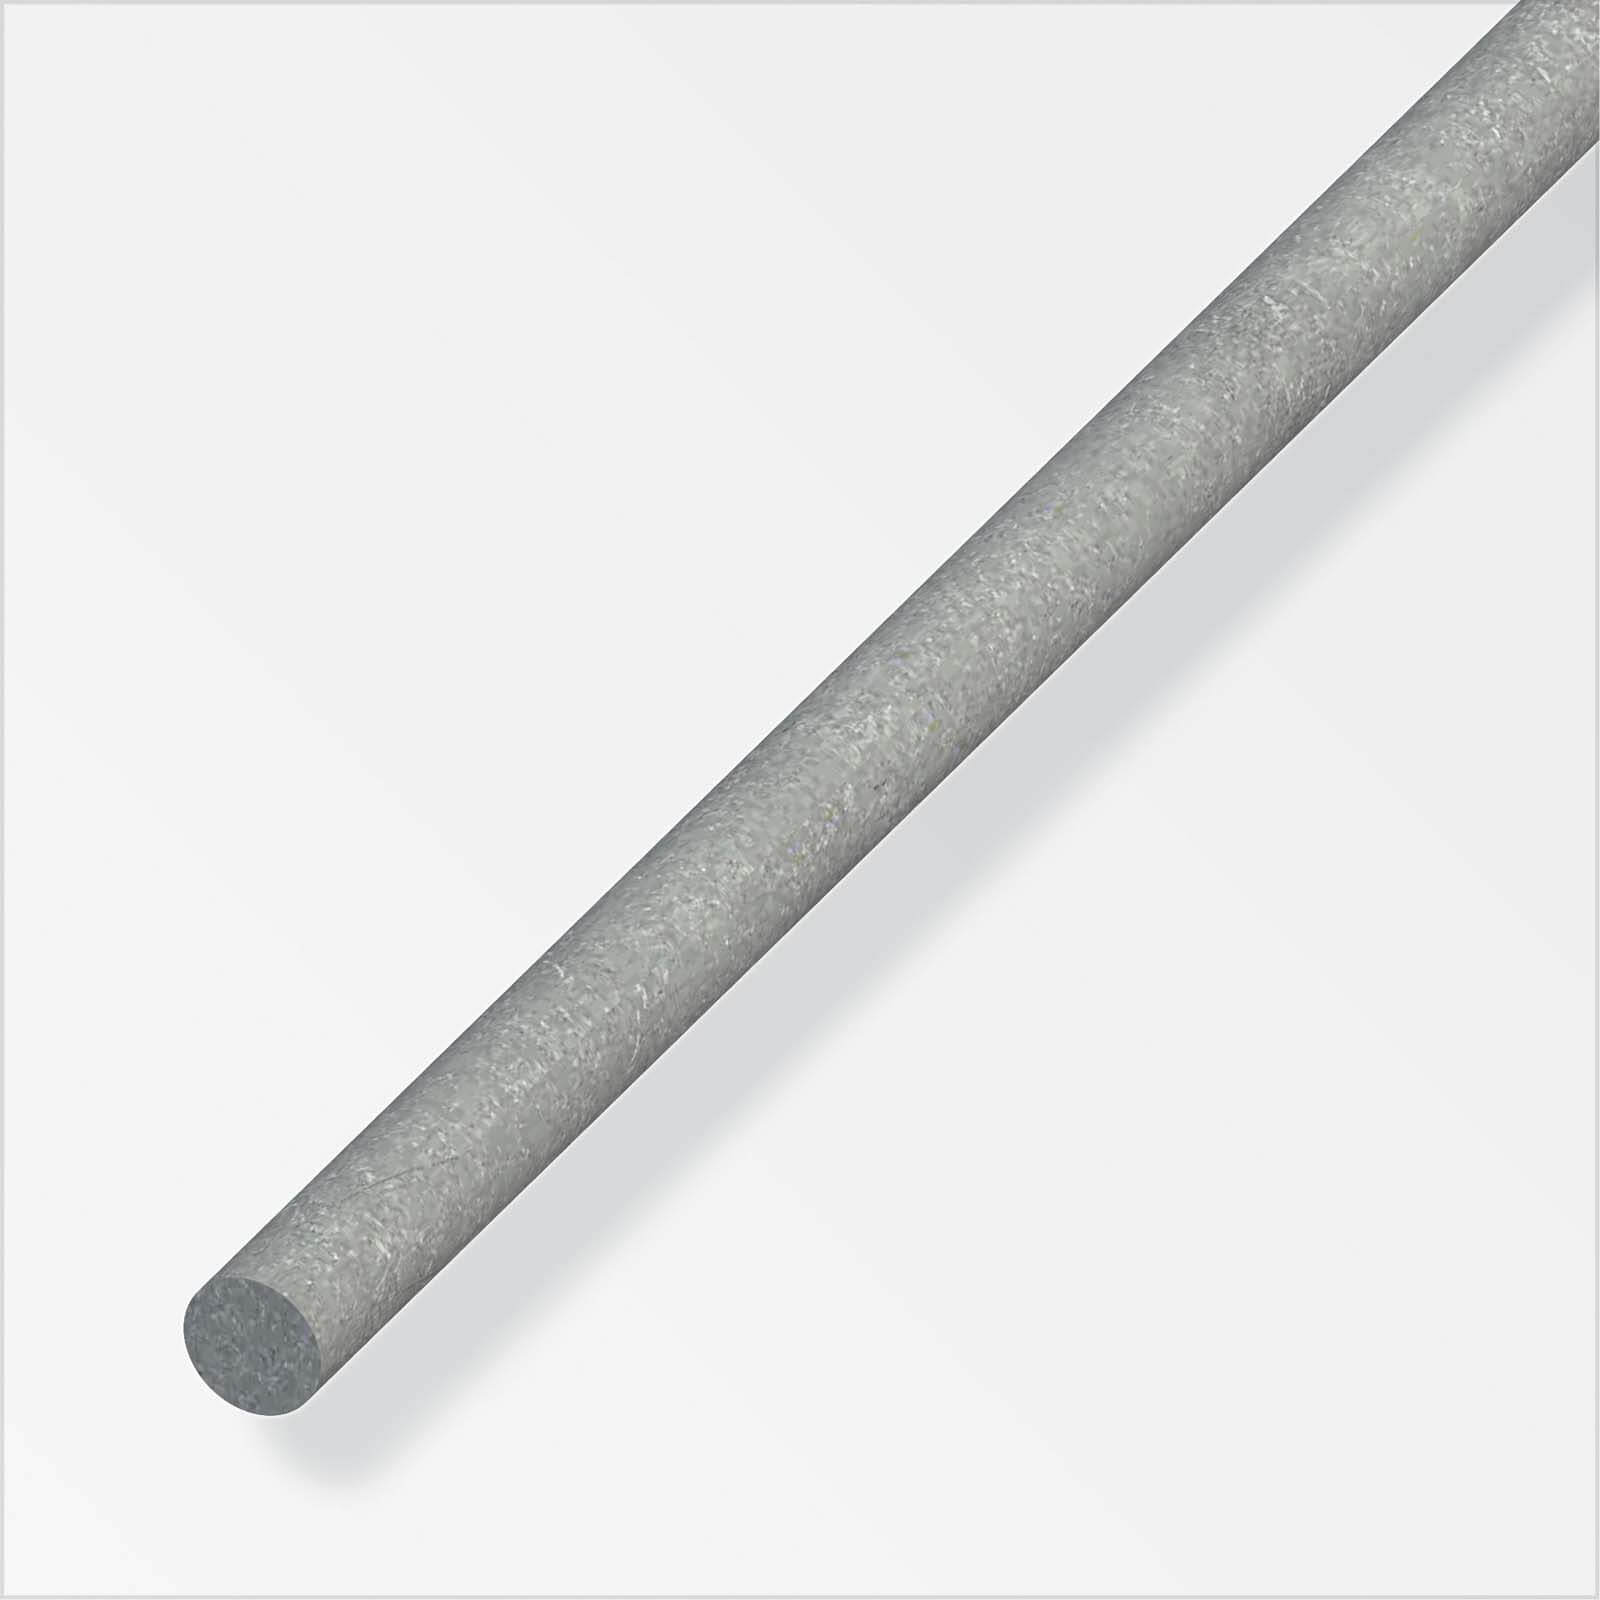 Photo of Drawn Steel Round Bar - 1m X 8 X 8mm